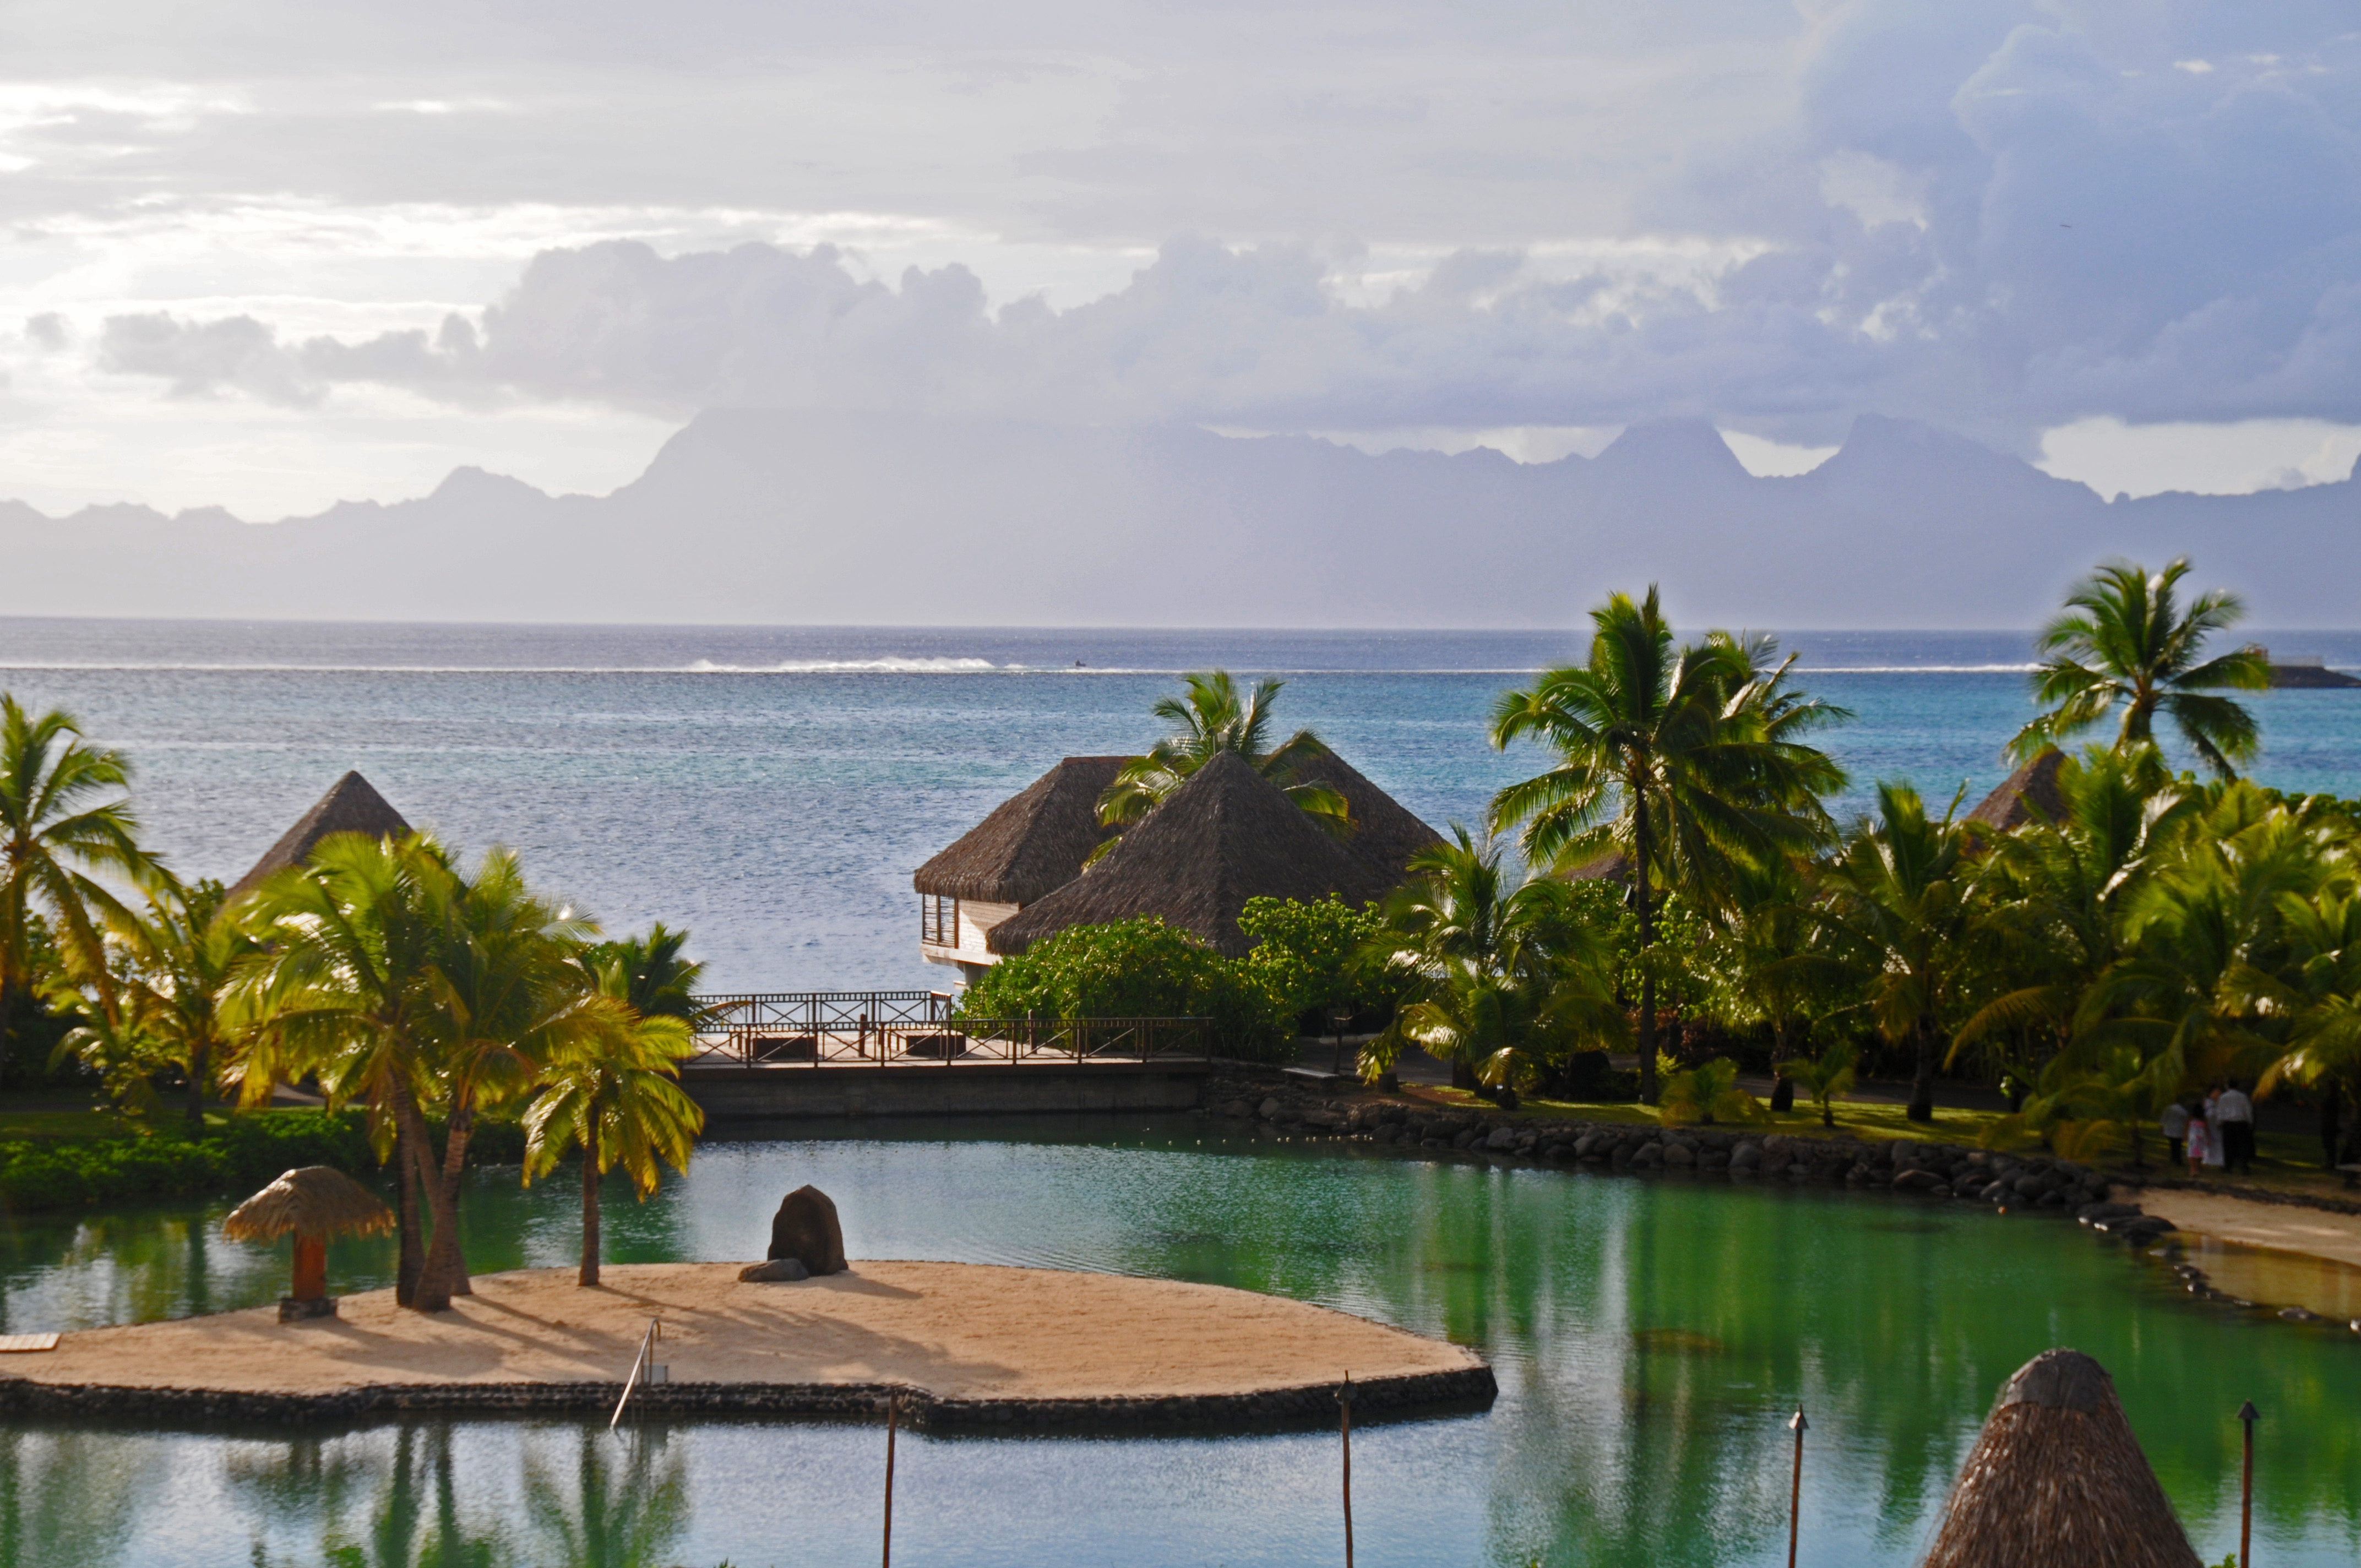 Intercontinental_Hotel,_near_Papeete,_French_Polynesia_-_panoramio